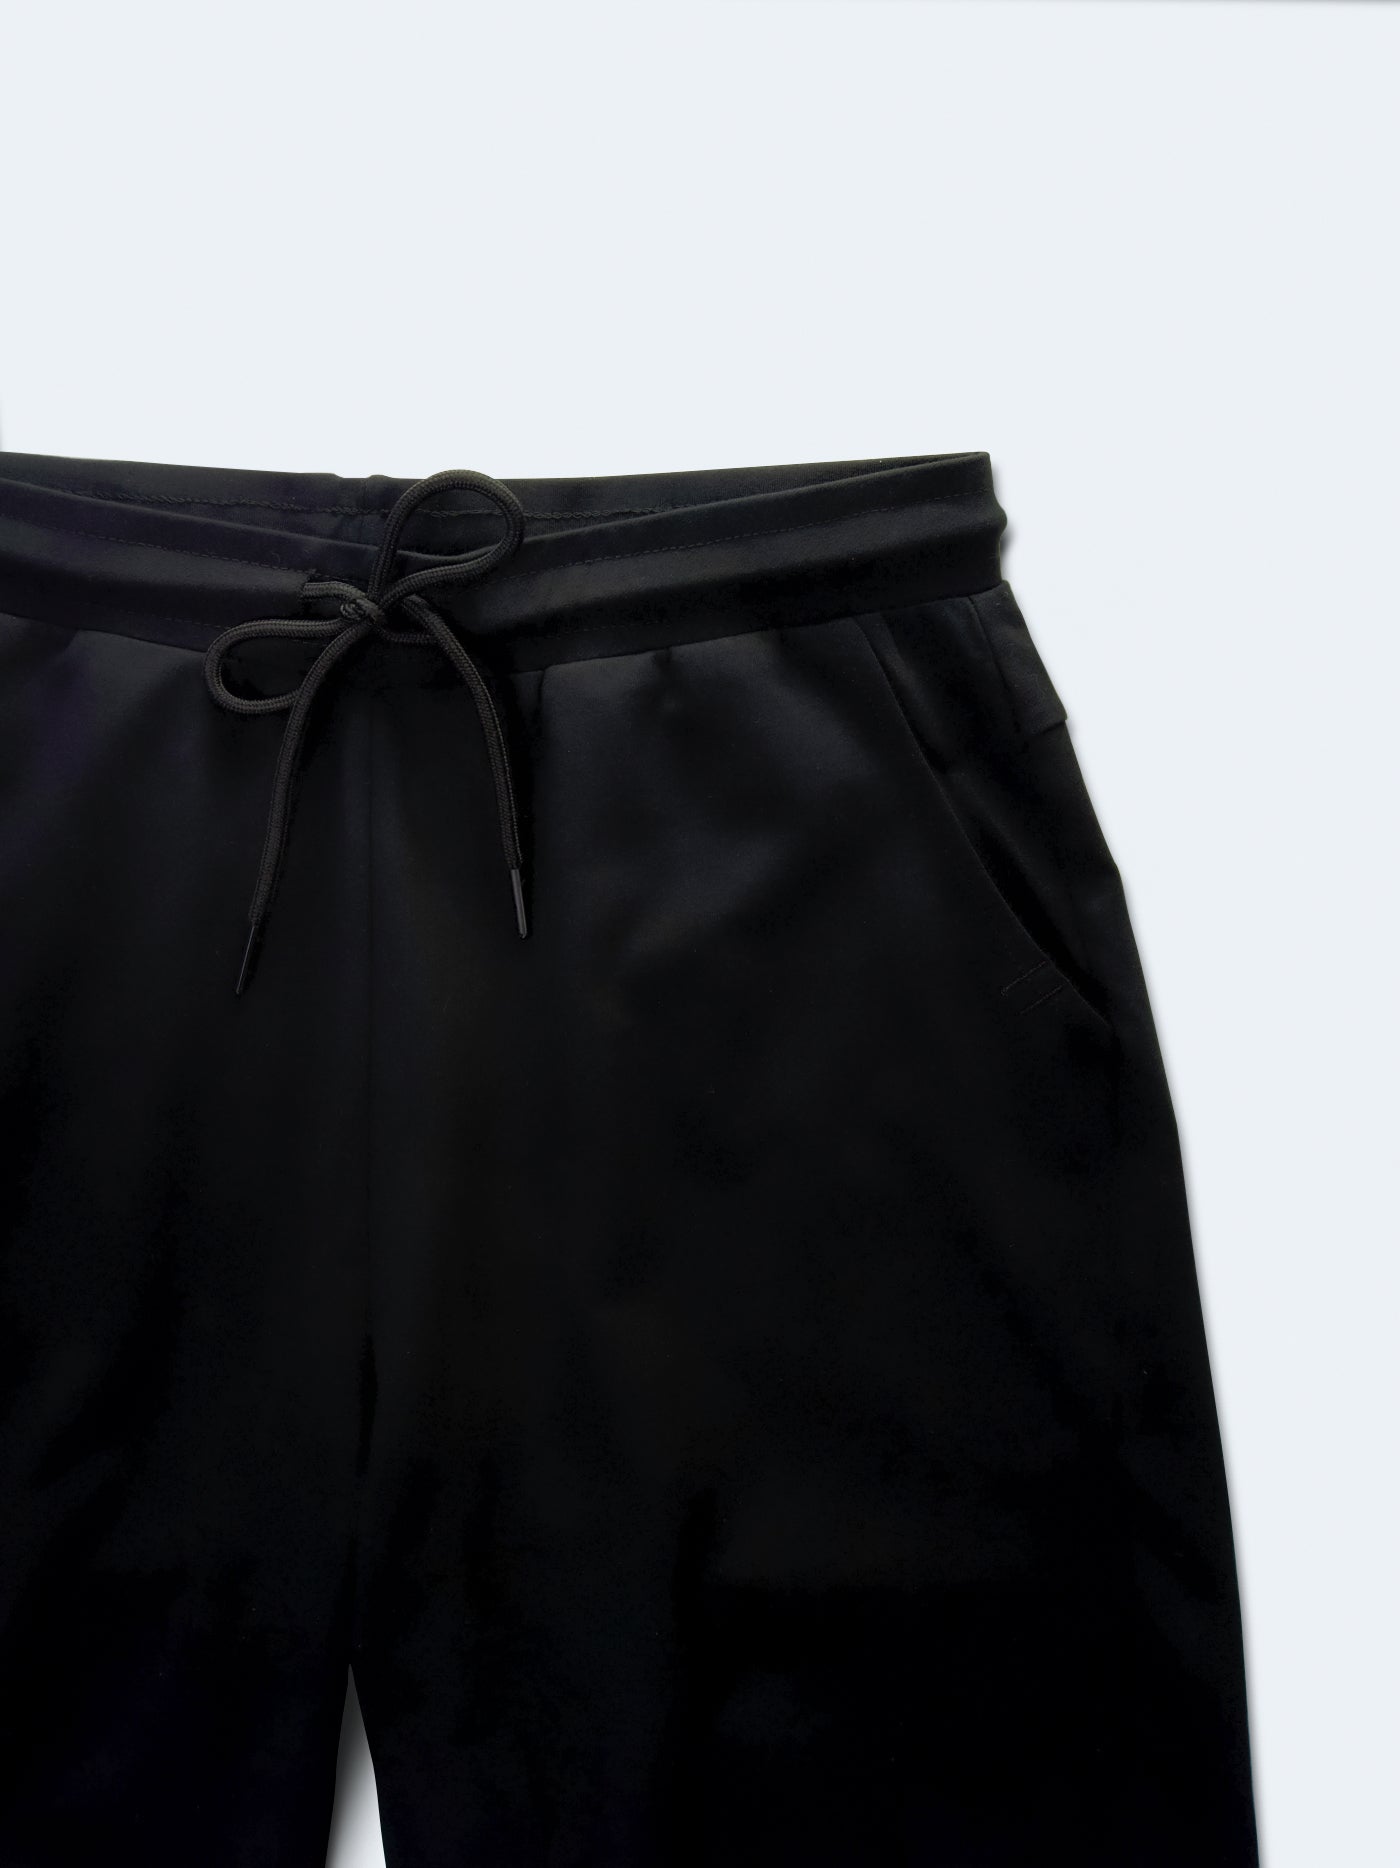 Basic Blend Shorts (Men)